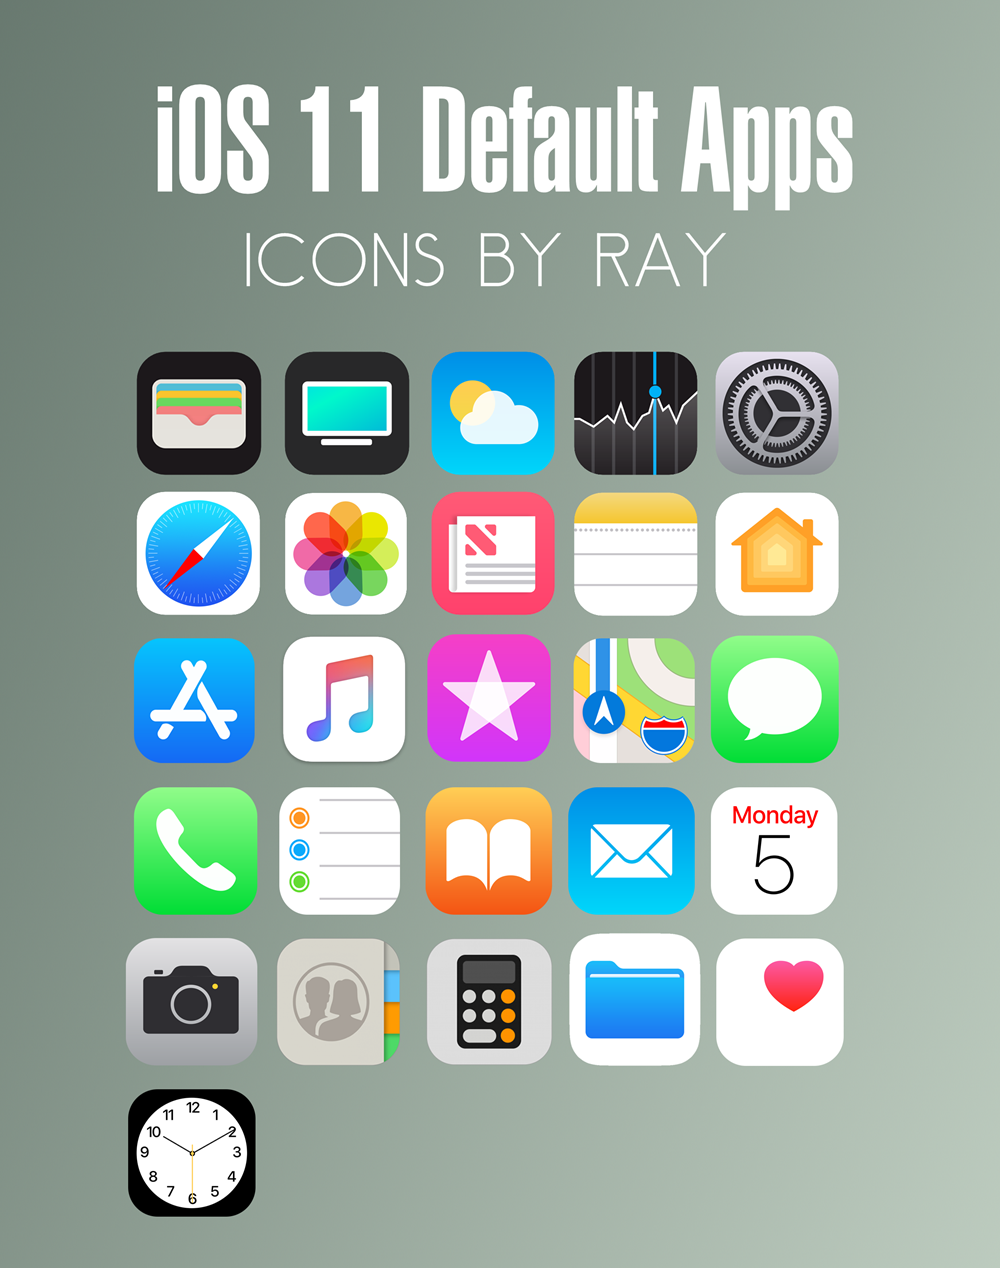 Ios 11 Default App Icons By Ray By Raiiy On Deviantart